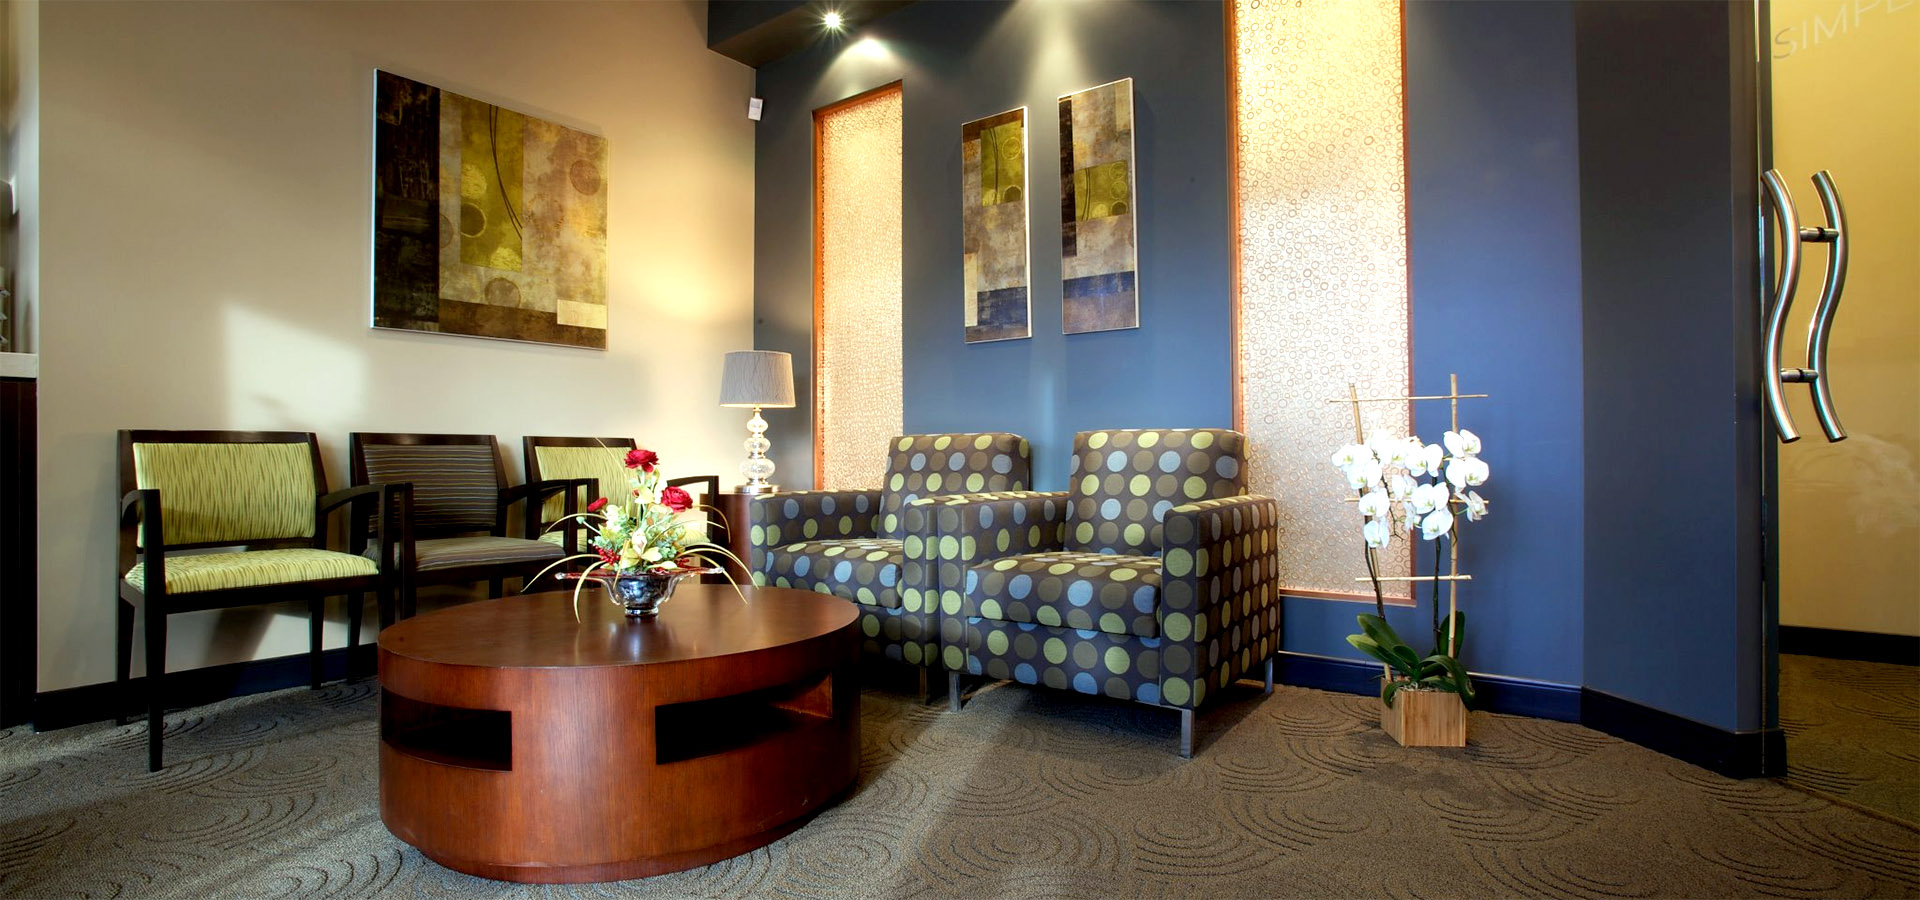 Image of Simply Dental waiting room